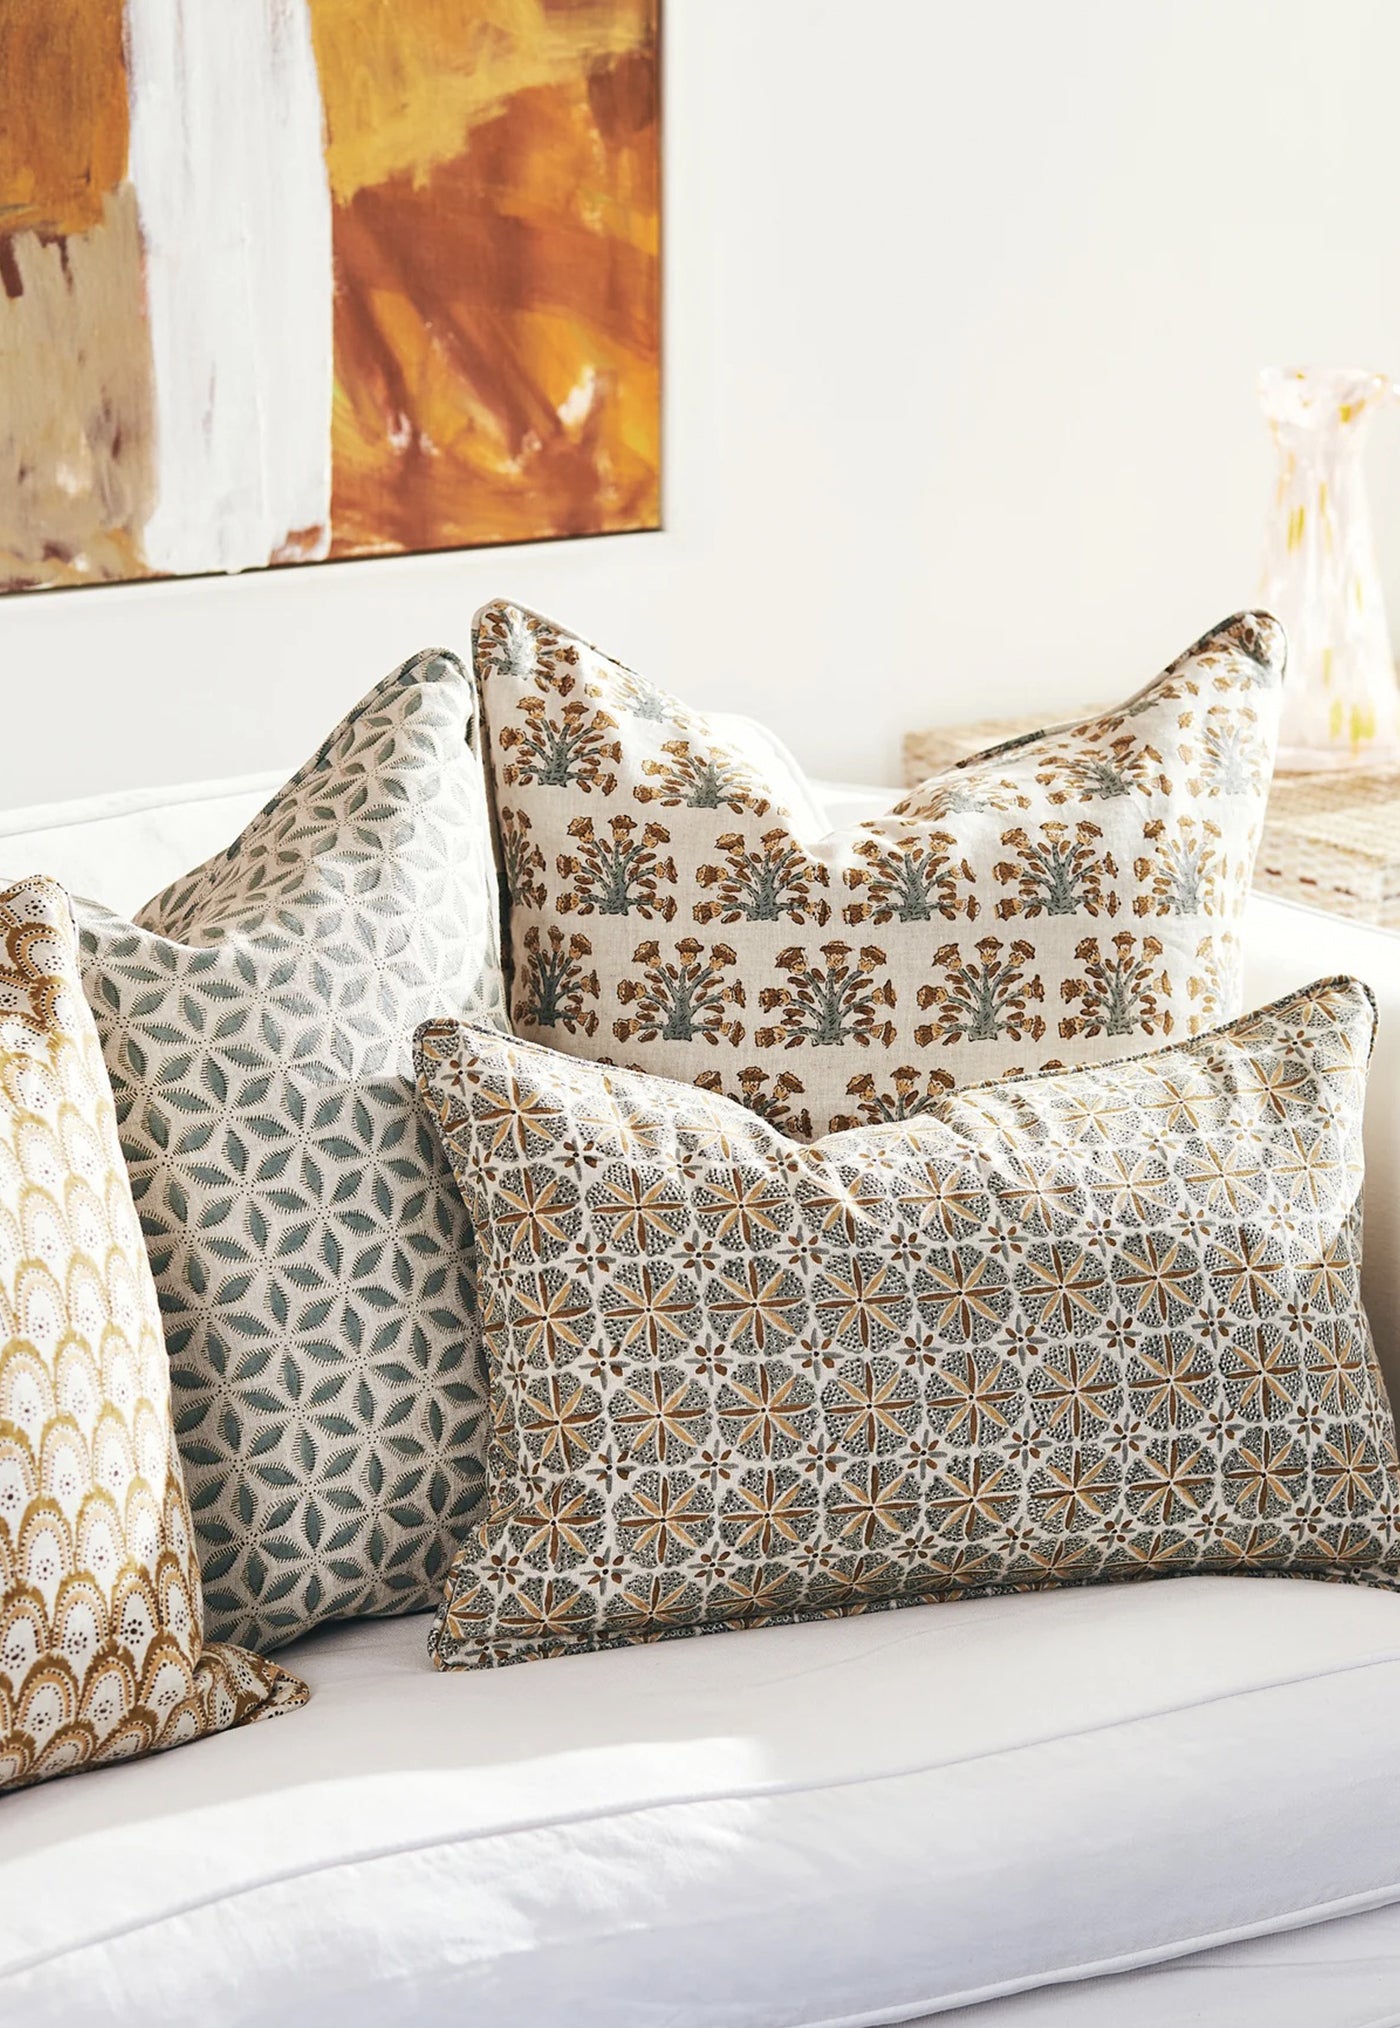 Assam Egypt Linen Cushion 35x55cm sold by Angel Divine